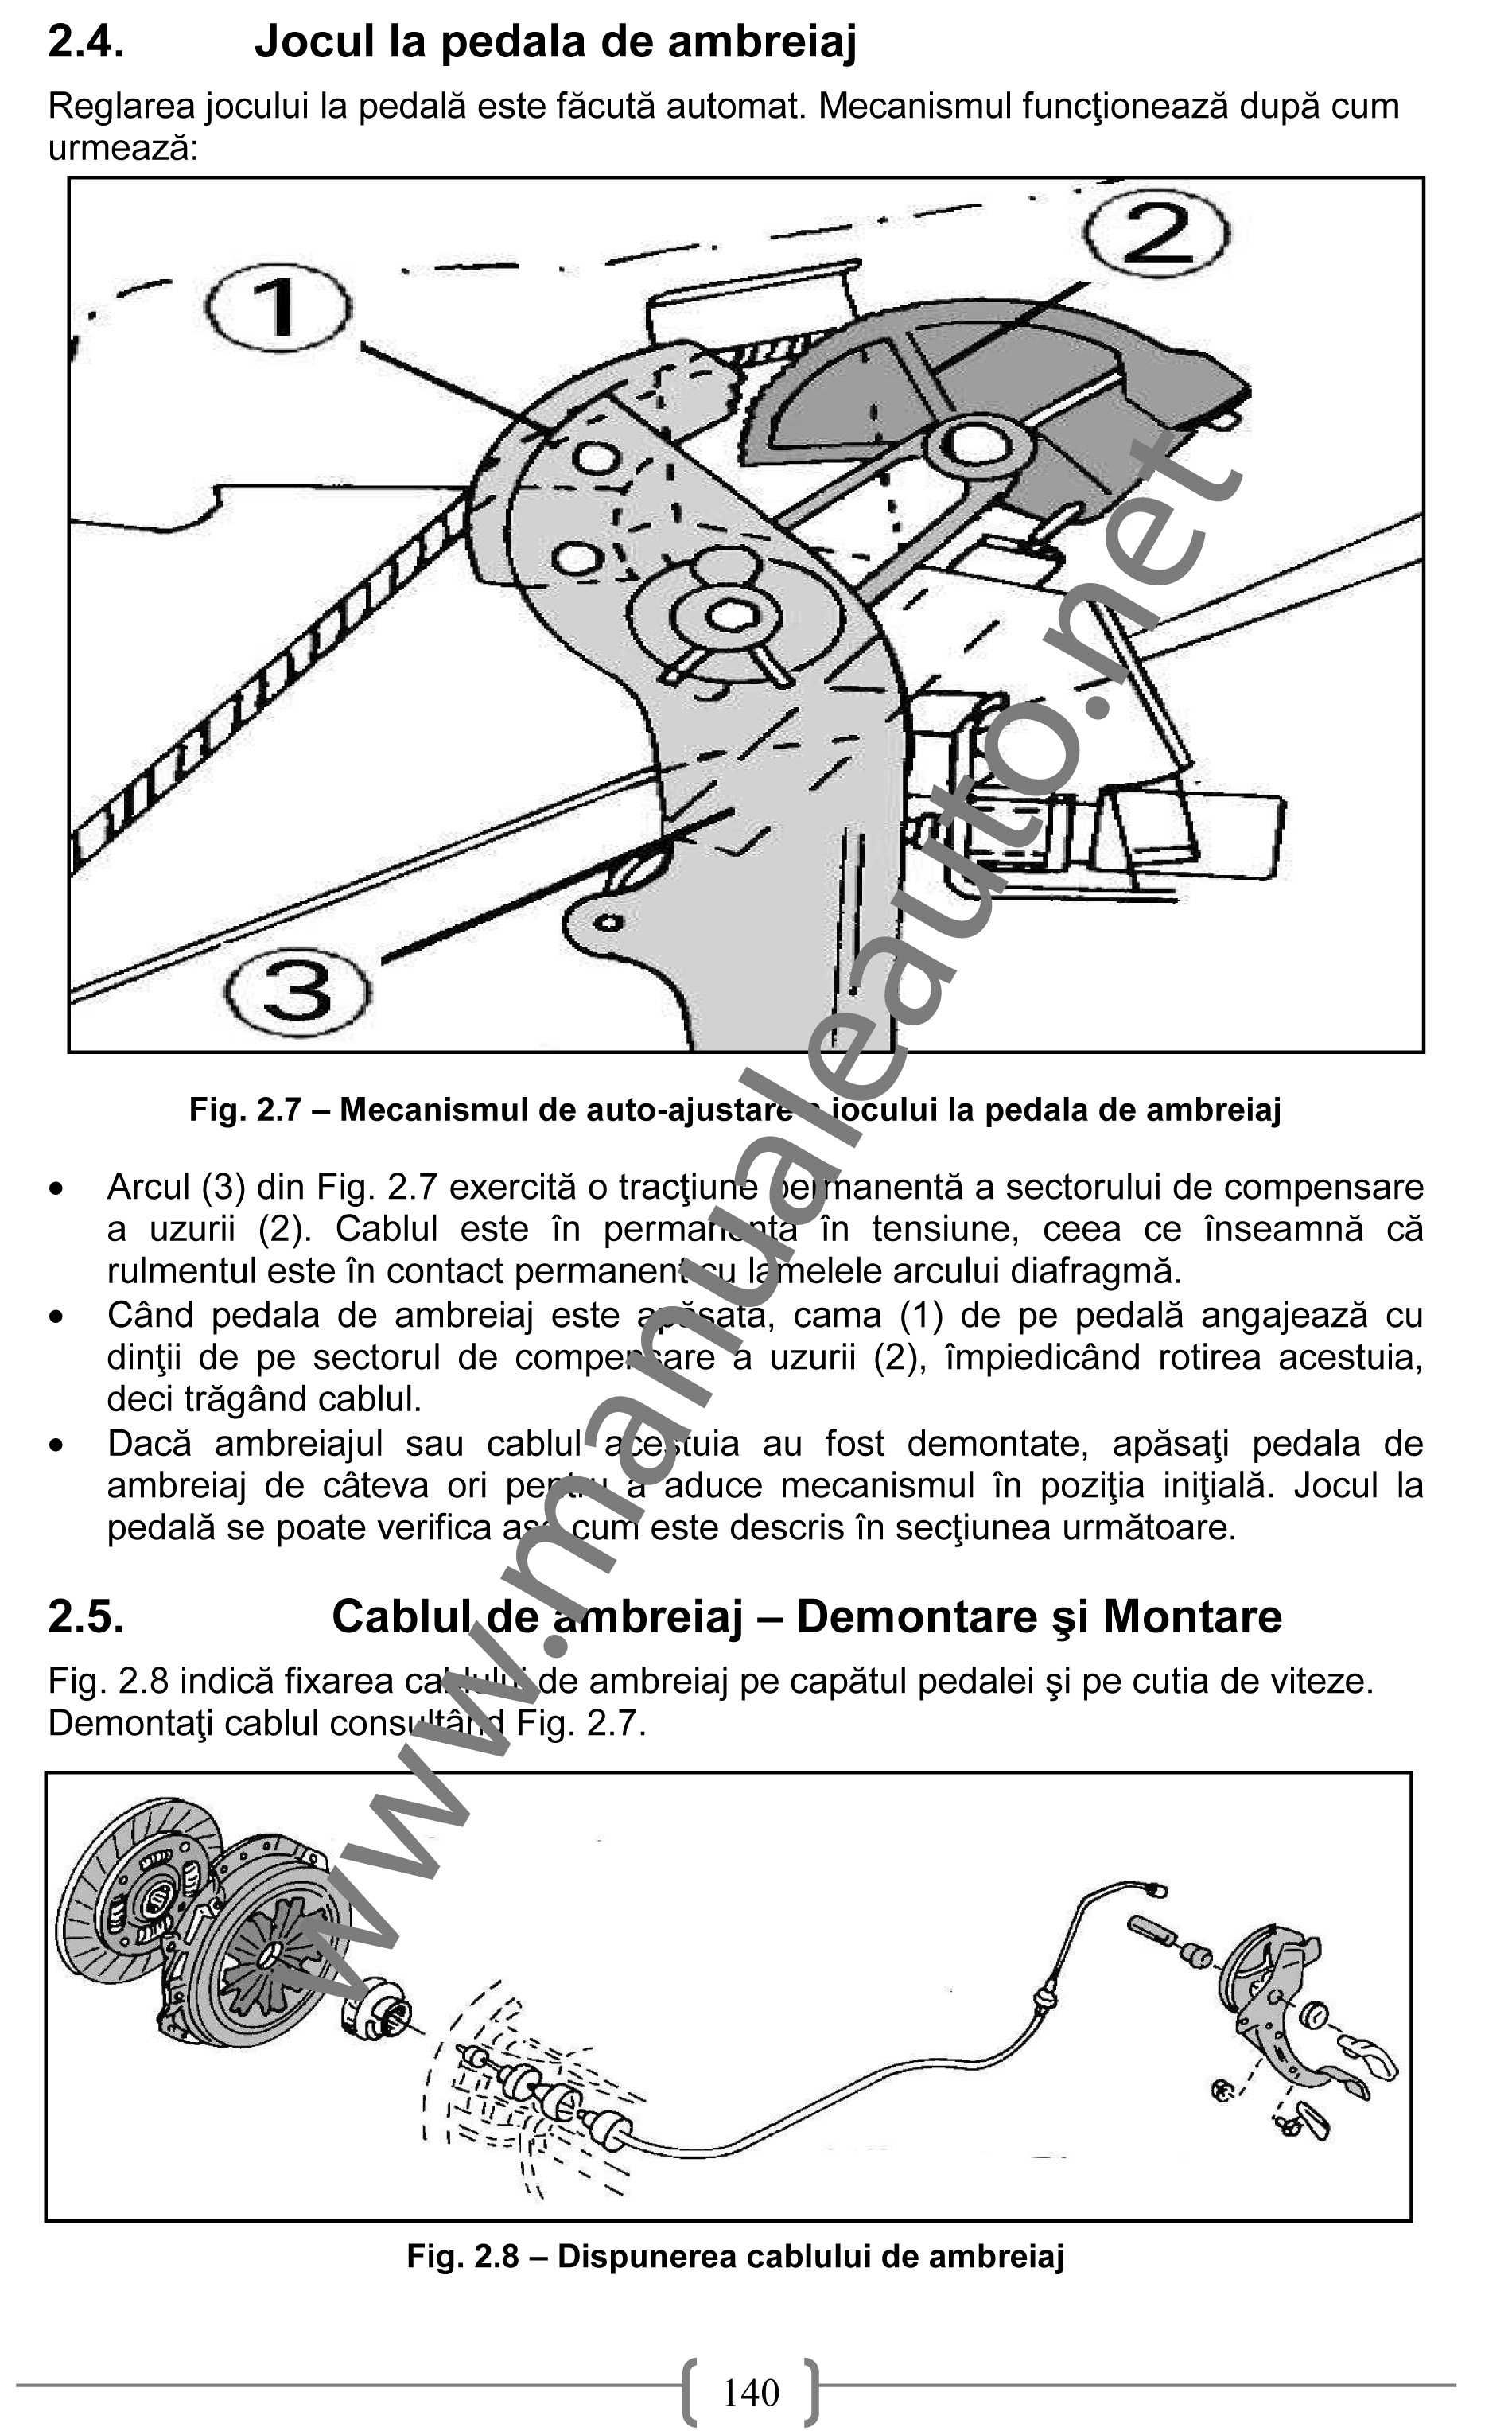 Manual reparatii pentru Renault Clio 1998-2002 in limba romana